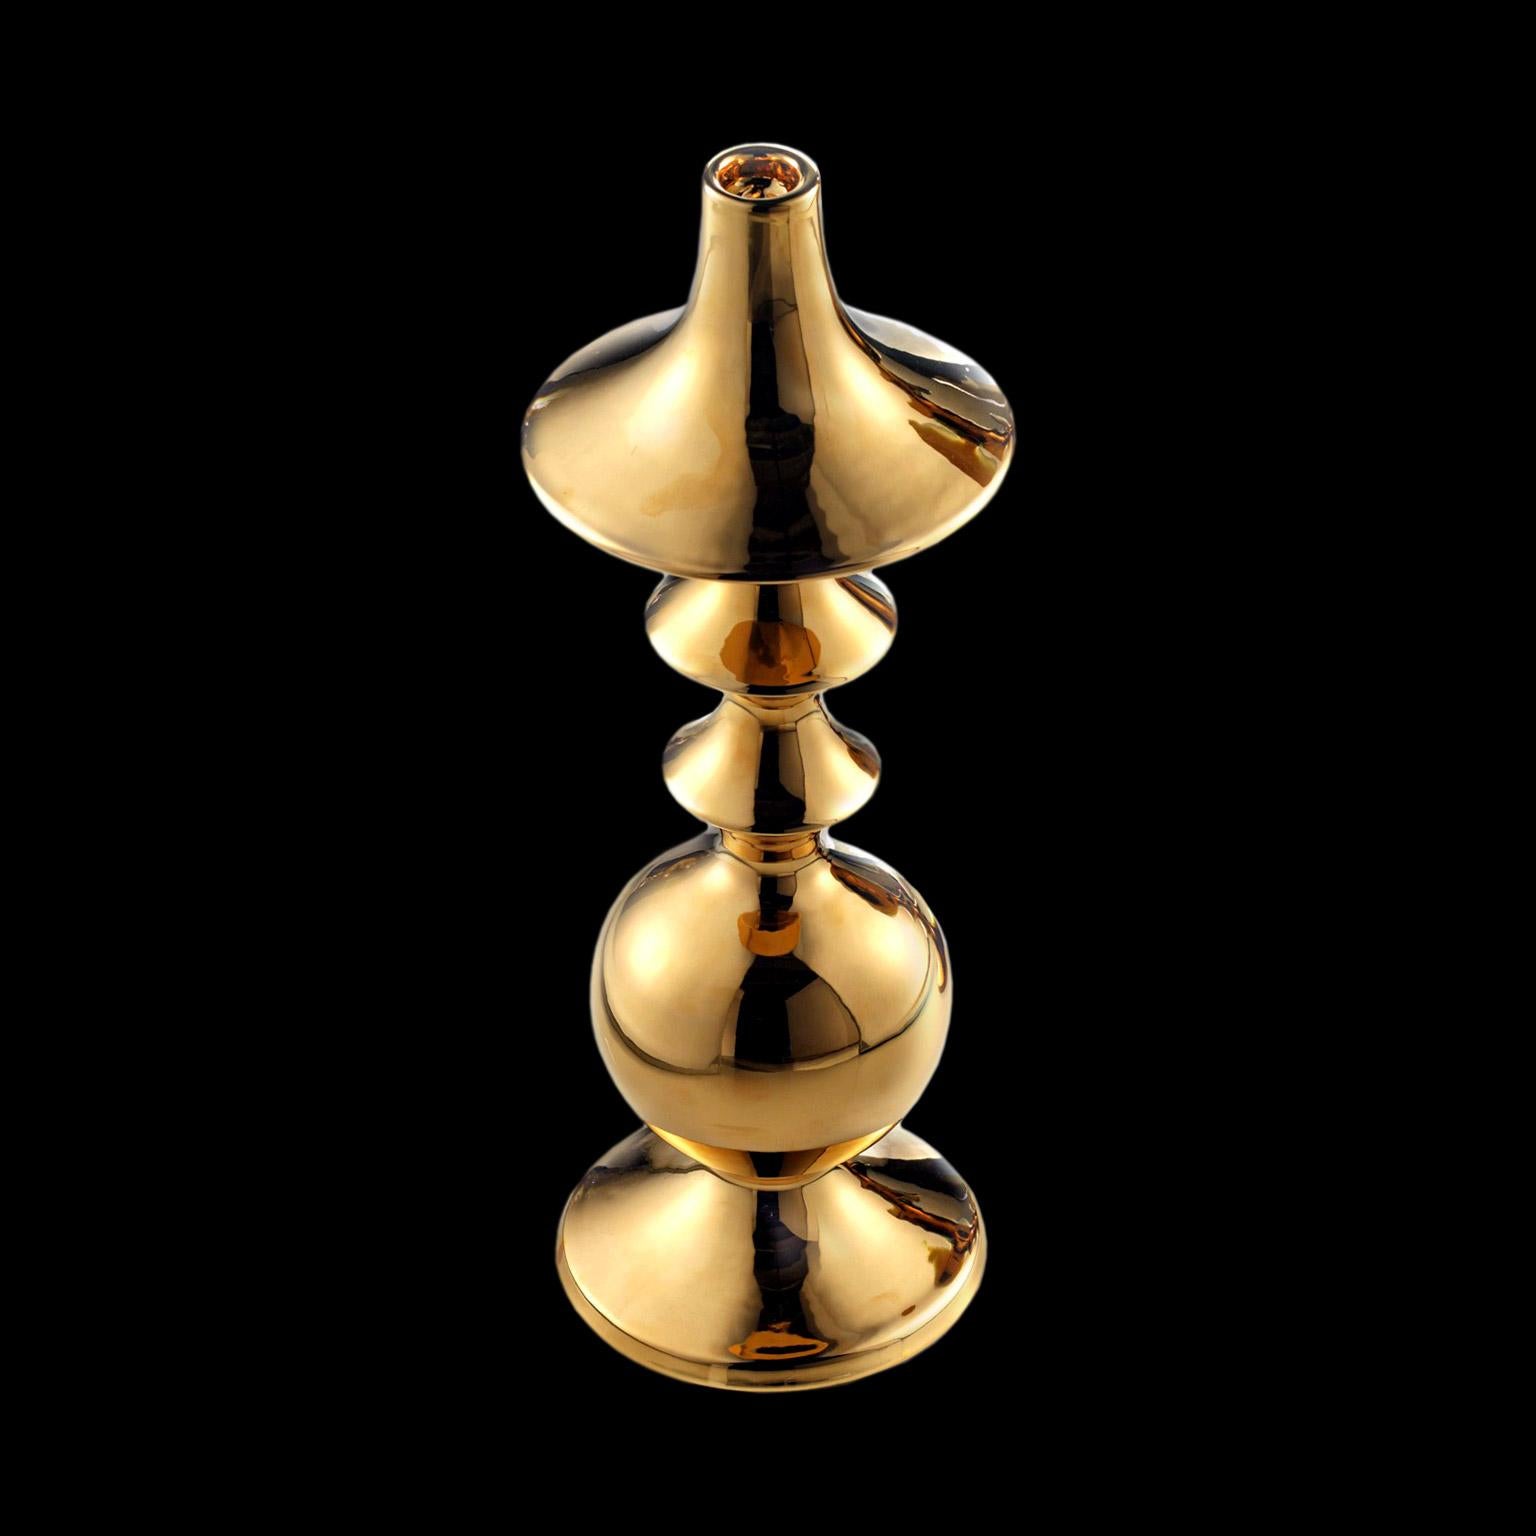 Ceramic vase hand-finished in 24-karat gold
BRIX, code CA030, measures: H. 50.0 cm., Dm. 18.0 cm.